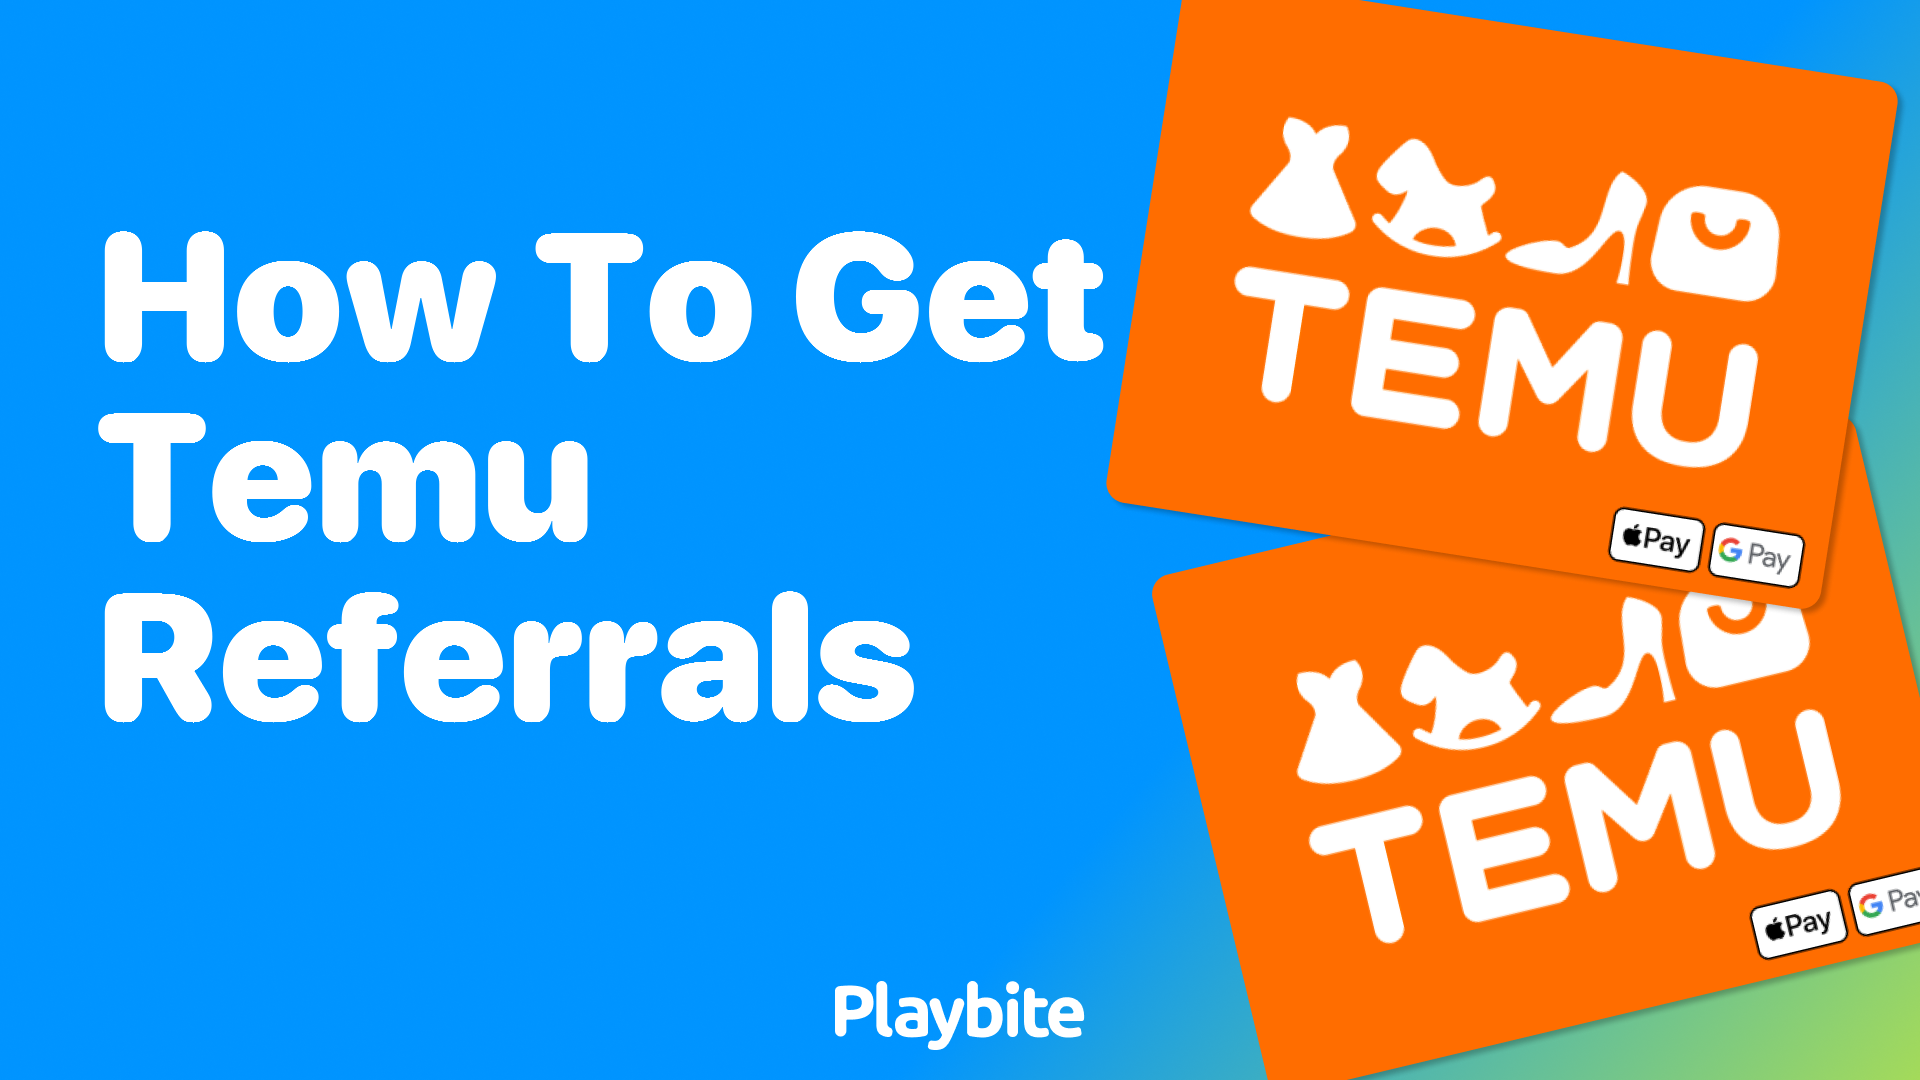 How to Get Temu Referrals: A Bright Idea for Rewards